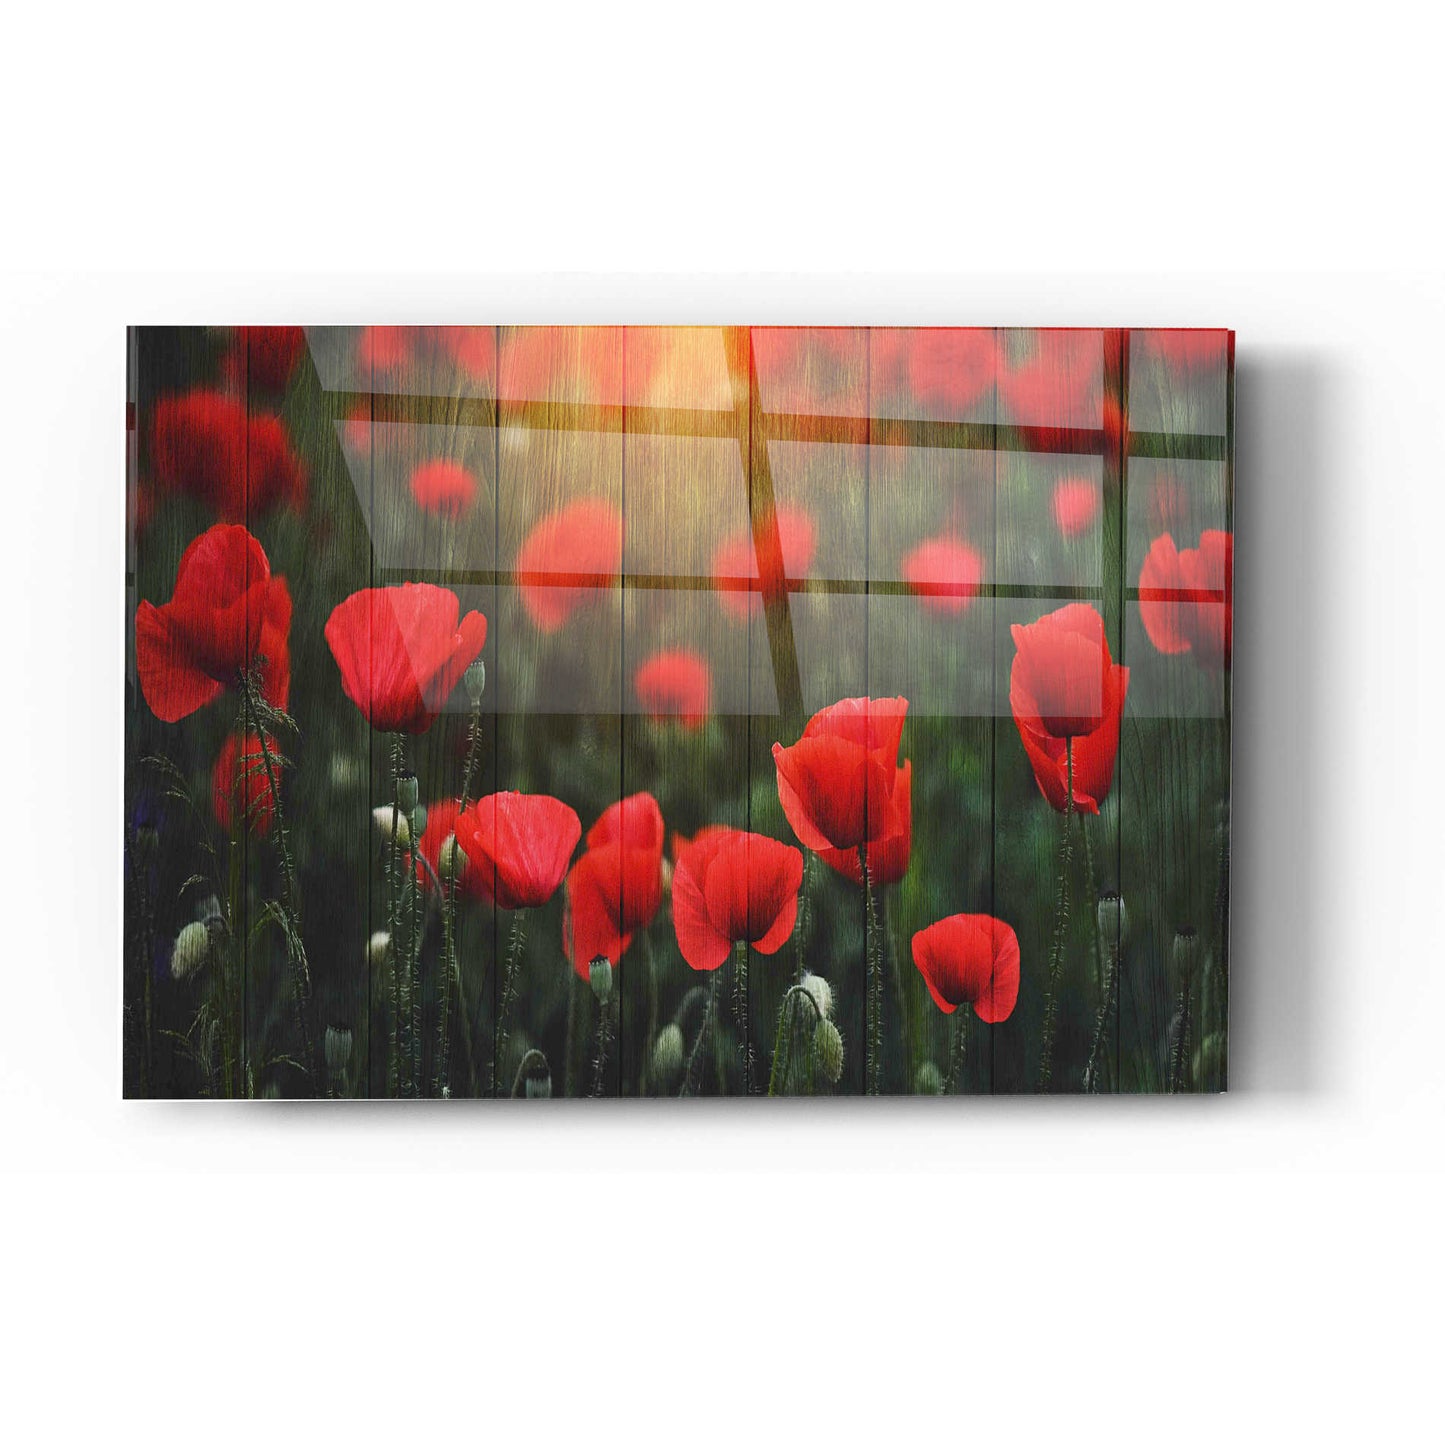 Epic Art "Wood Series: Field of Poppies" Acrylic Glass Wall Art,16x24